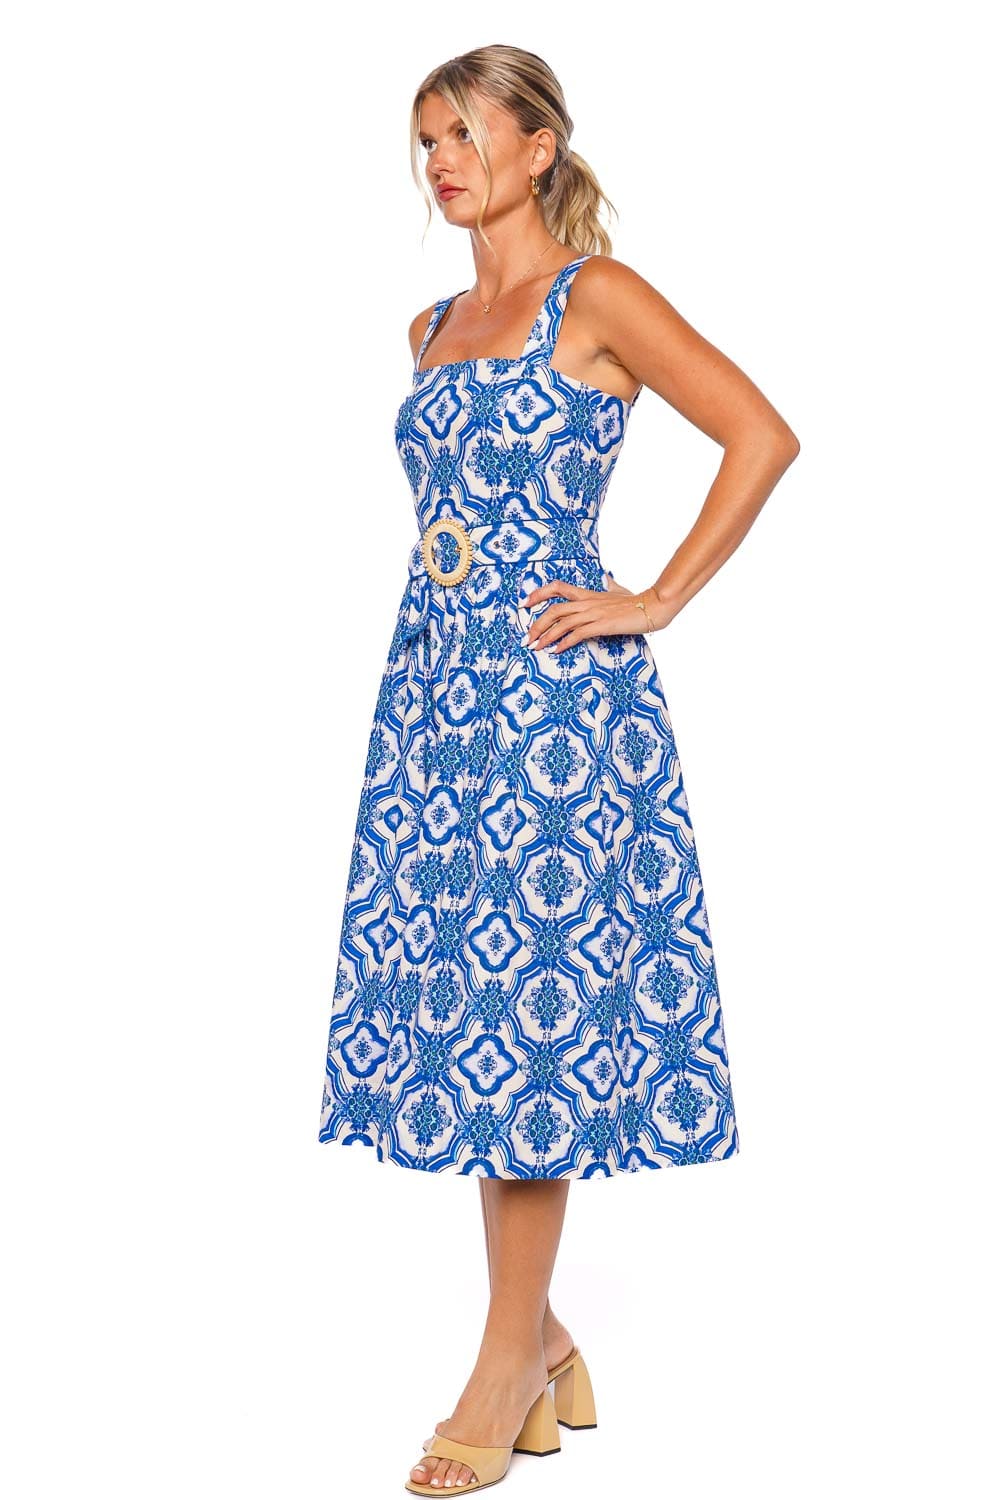 Cara Cara Candace Dress 108 Belle Tile Blue